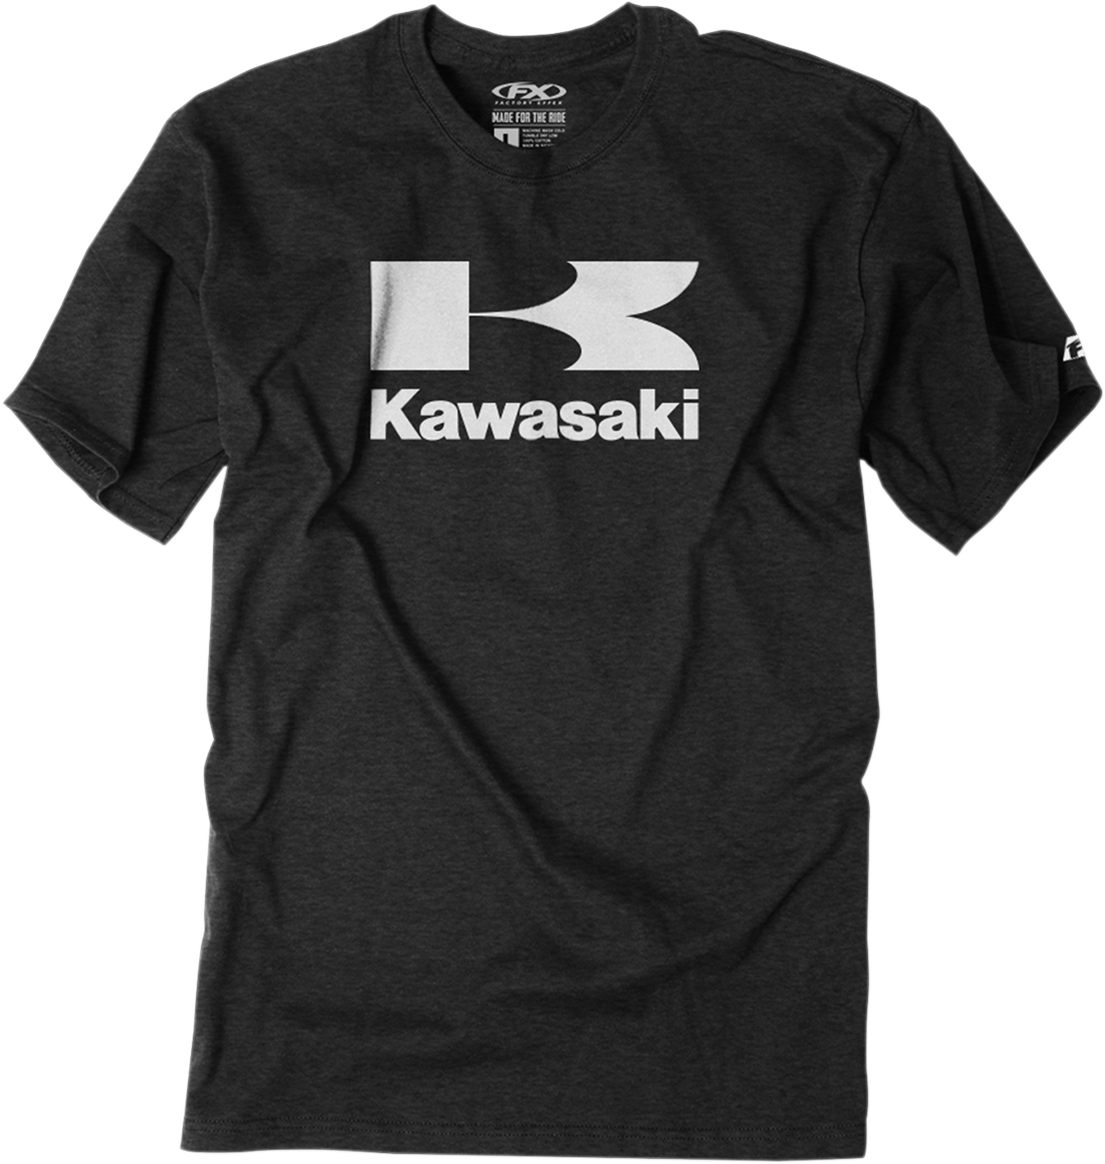 FACTORY EFFEX Kawasaki Flying-K T-Shirt - Charcoal - Large 22-87114